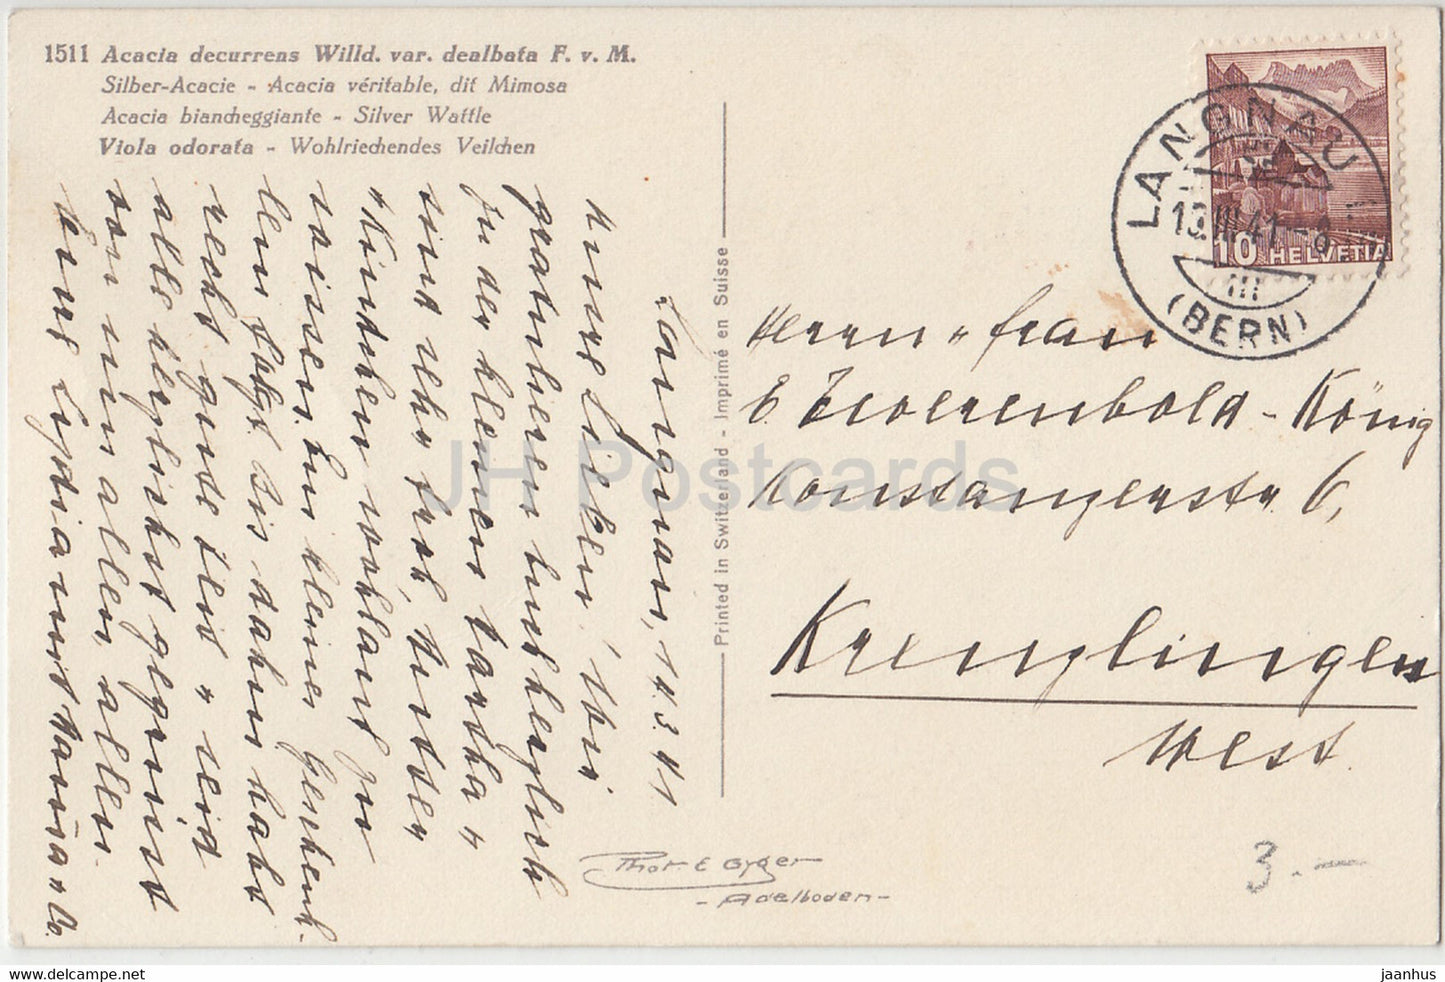 Acacia decurrens - Silber Acacie - Viola odorata - fleurs - 1511 - carte postale ancienne - 1941 - Suisse - utilisé